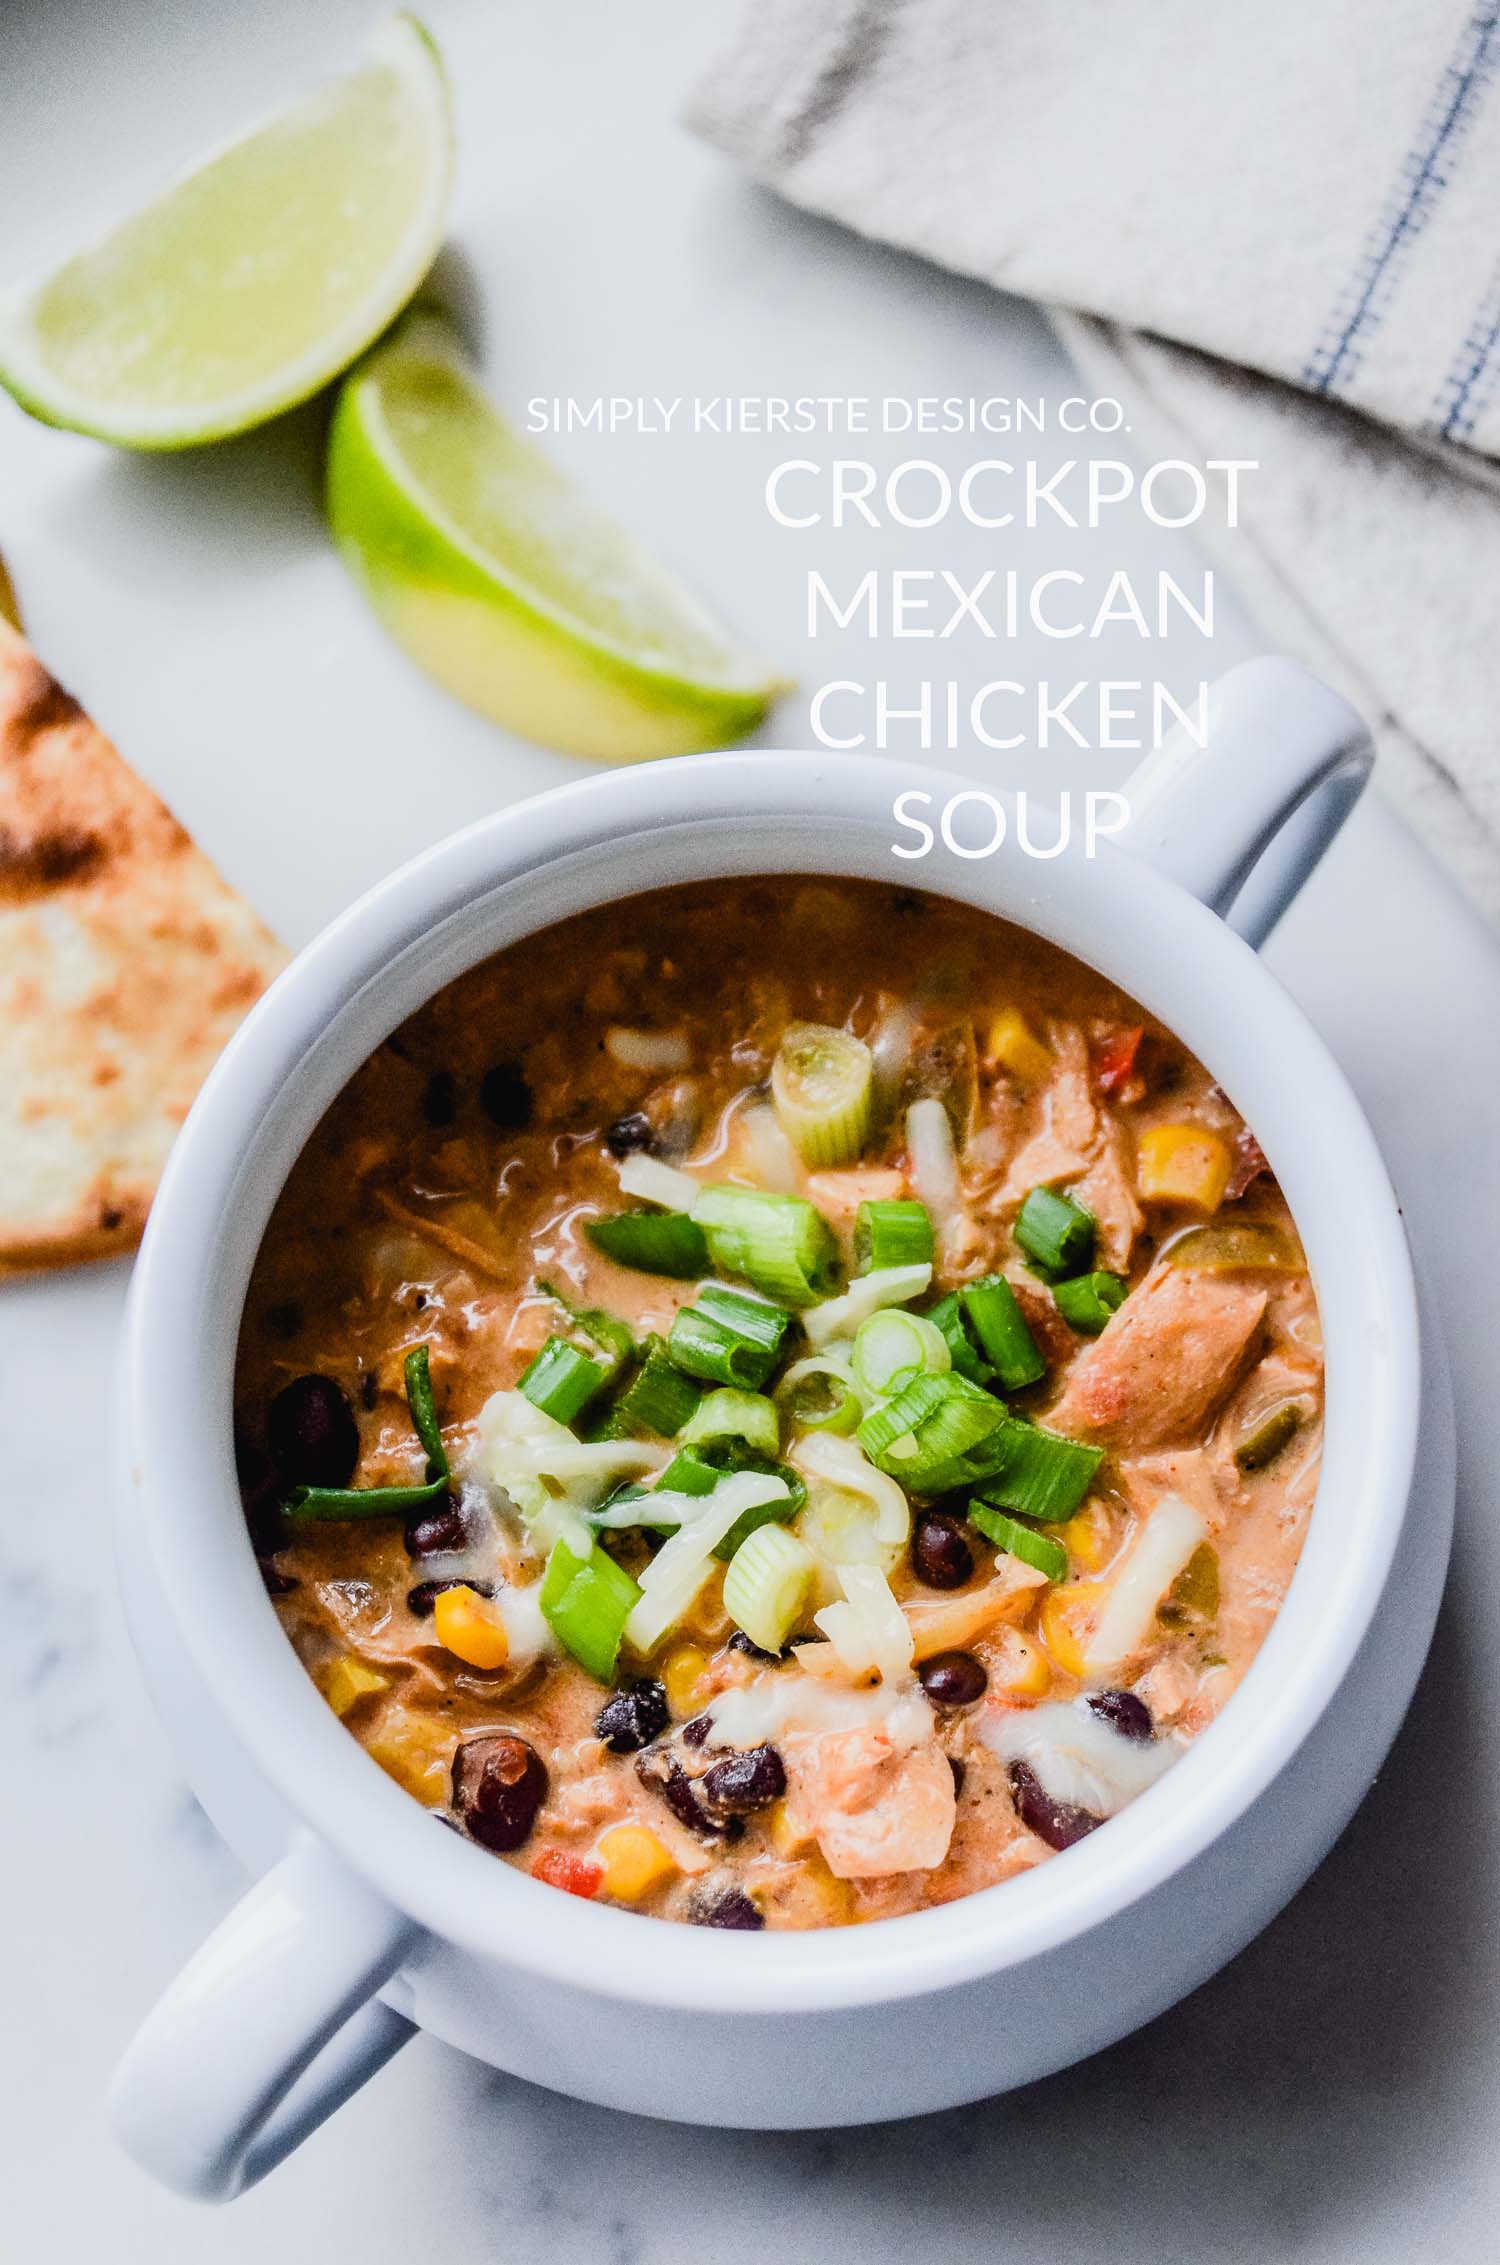 Crockpot Mexican Chicken Soup | oldsaltfarm.com #soup #crockpotsoup #crockpotrecipes #slowcookerrecipes